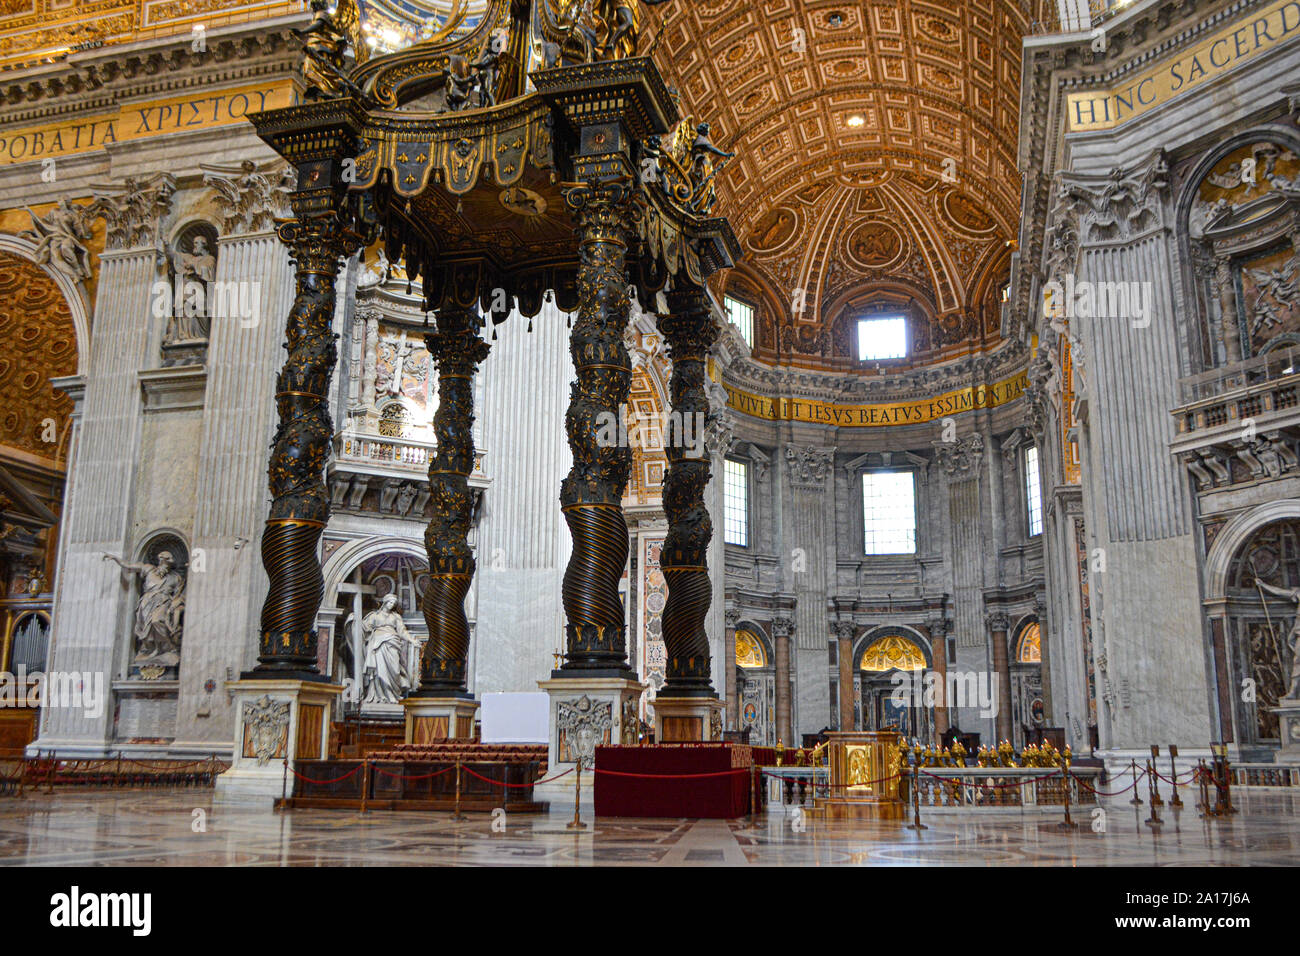 VATICAN CITY - Bernini's baldachin in the Saint Peter's Basilica in Vatican City. Stock Photo